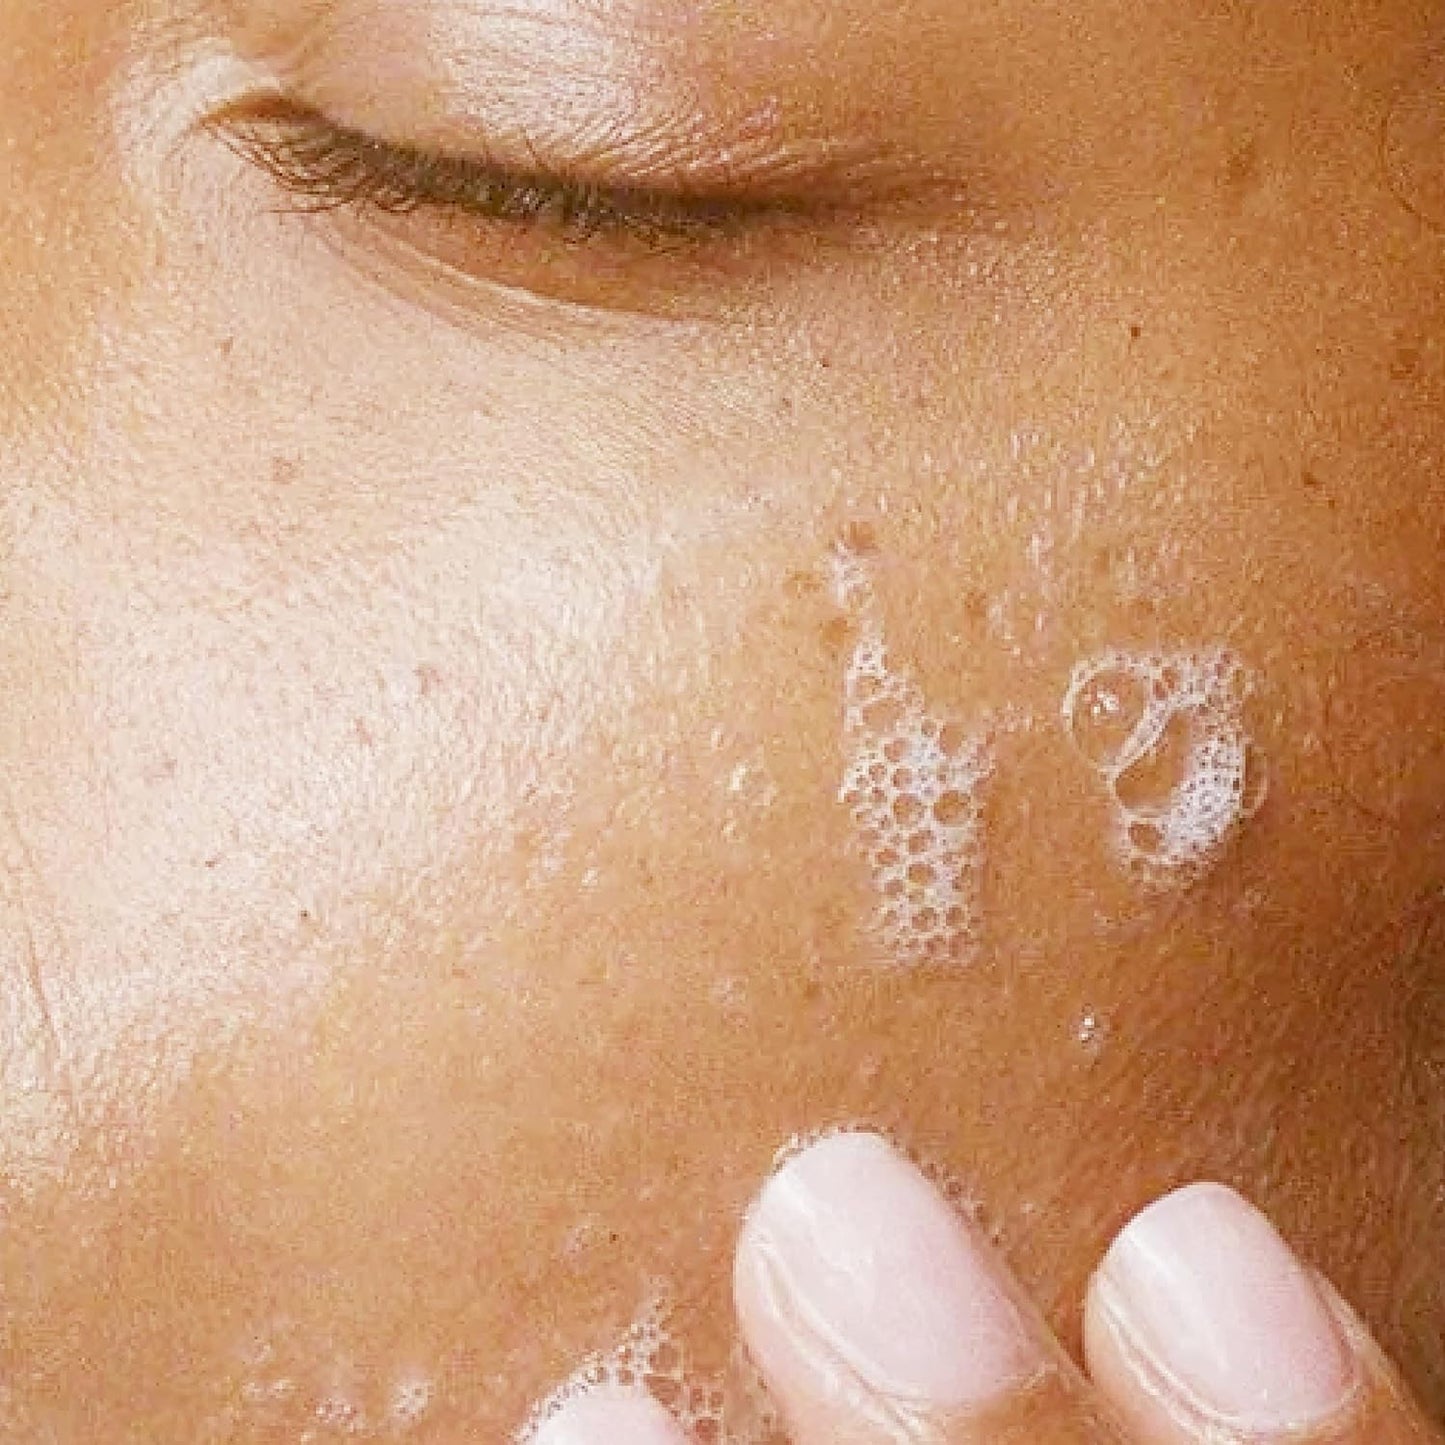 Refreshing Face Wash Citric AHA